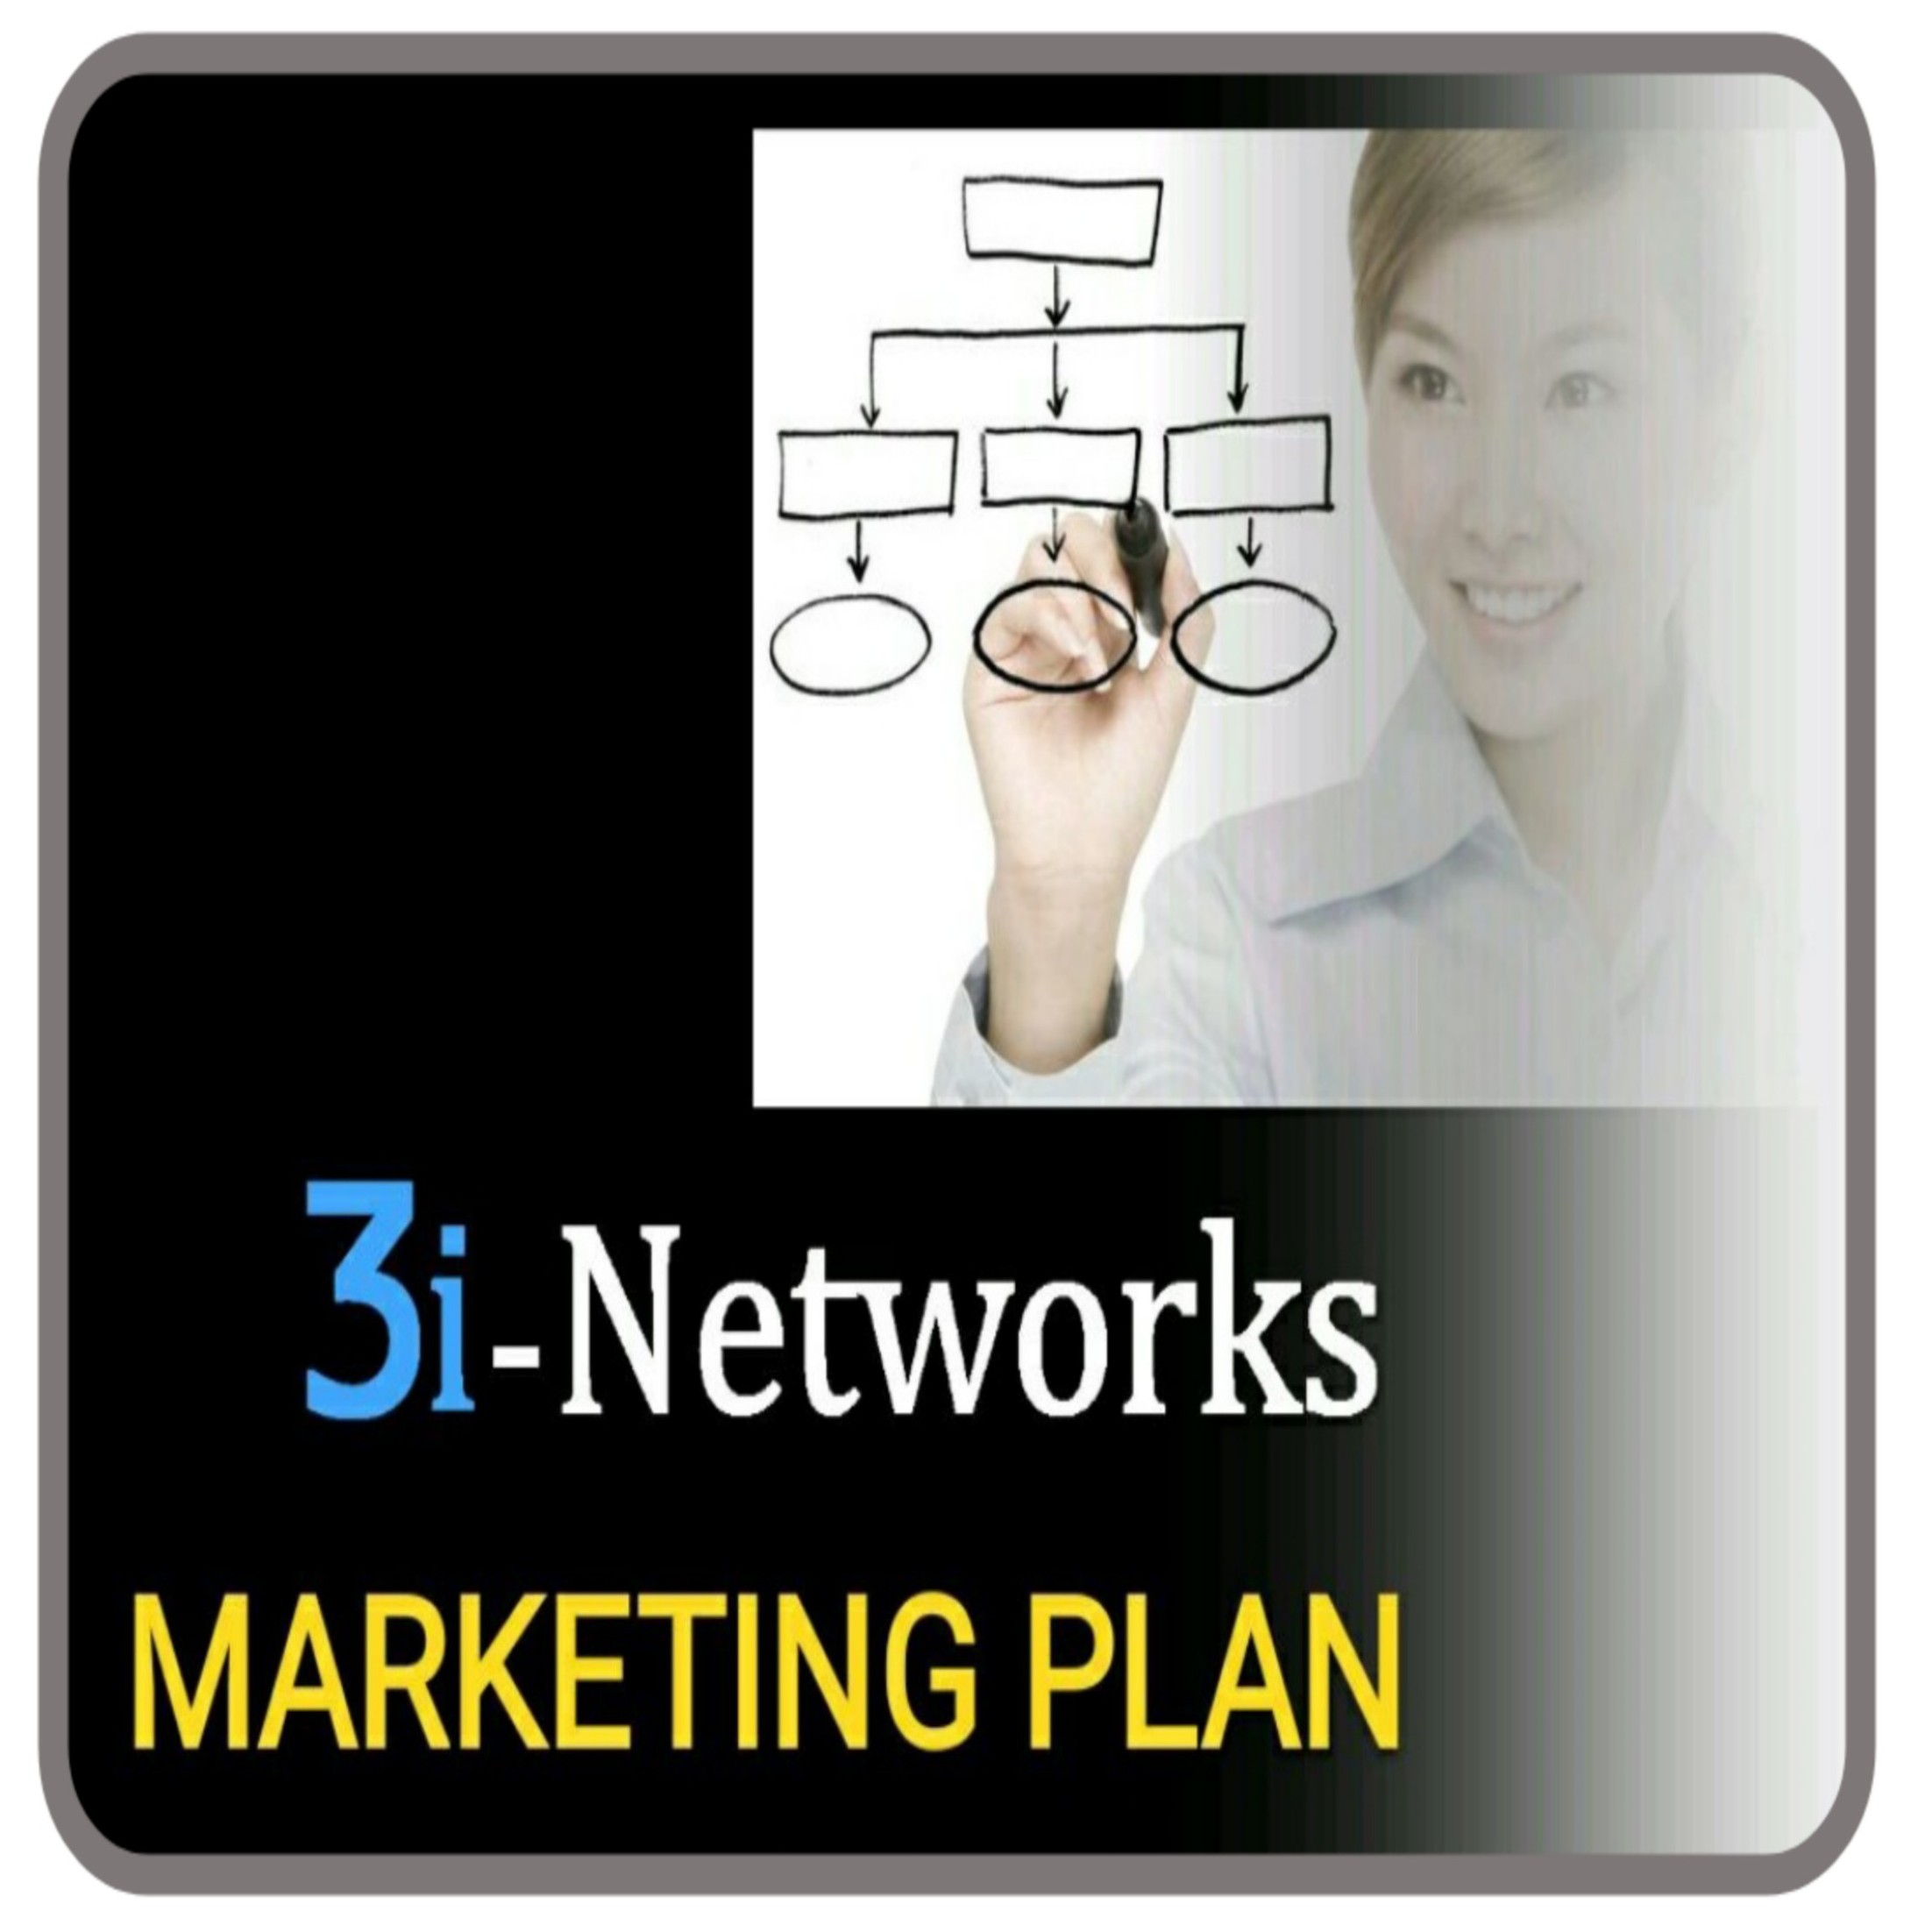 MARKETING PLAN 3I-NETWORKS